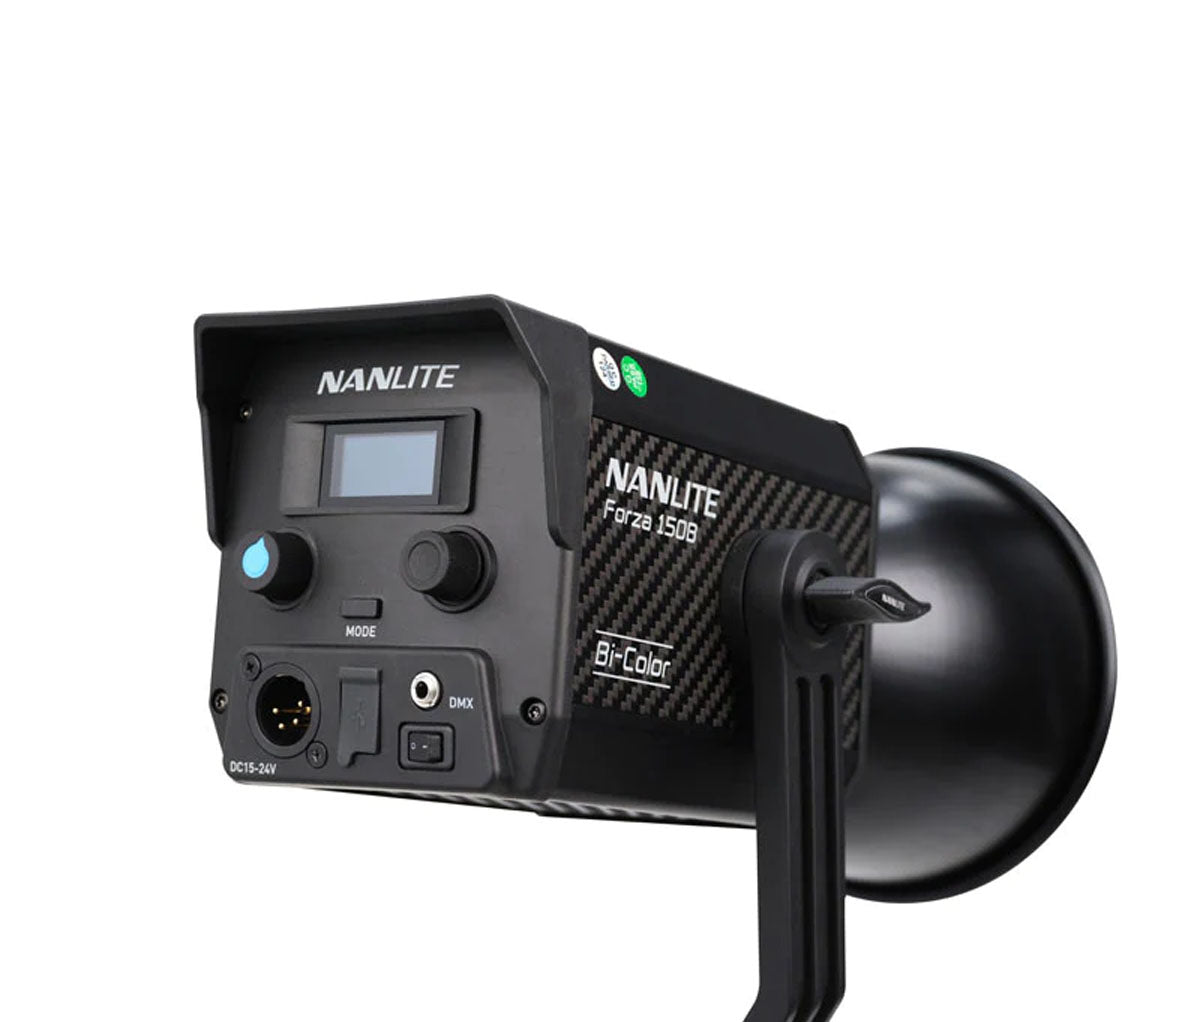 NANLITE(ナンライト) LEDライト Forza-150B (12-2042)